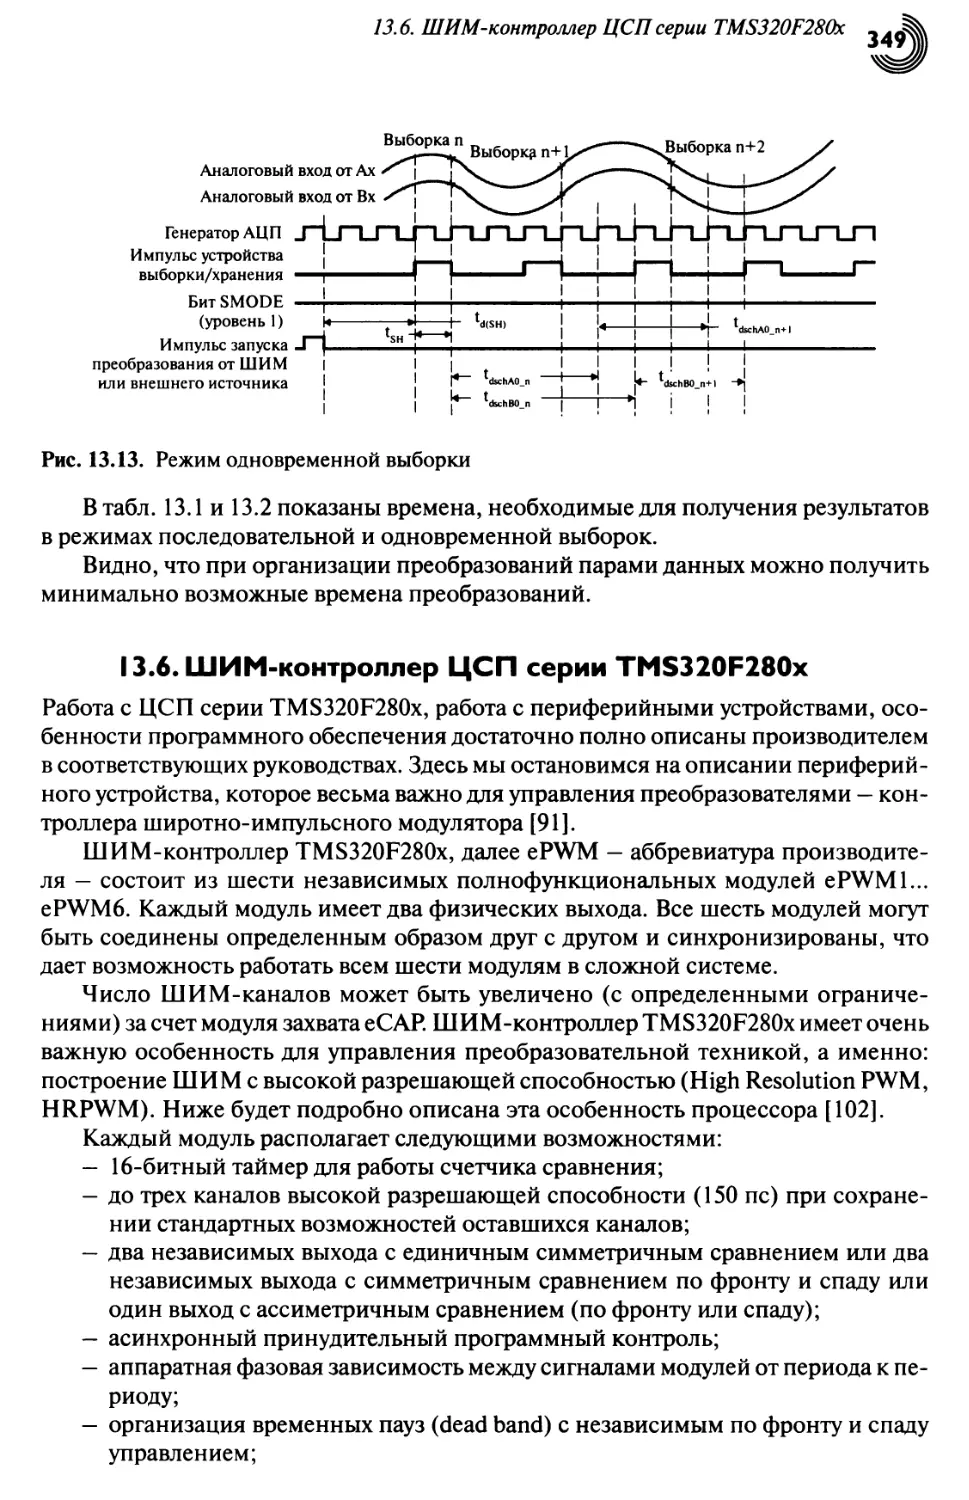 13.6. ШИМ-контроллер ЦСП серии TMS320F280x